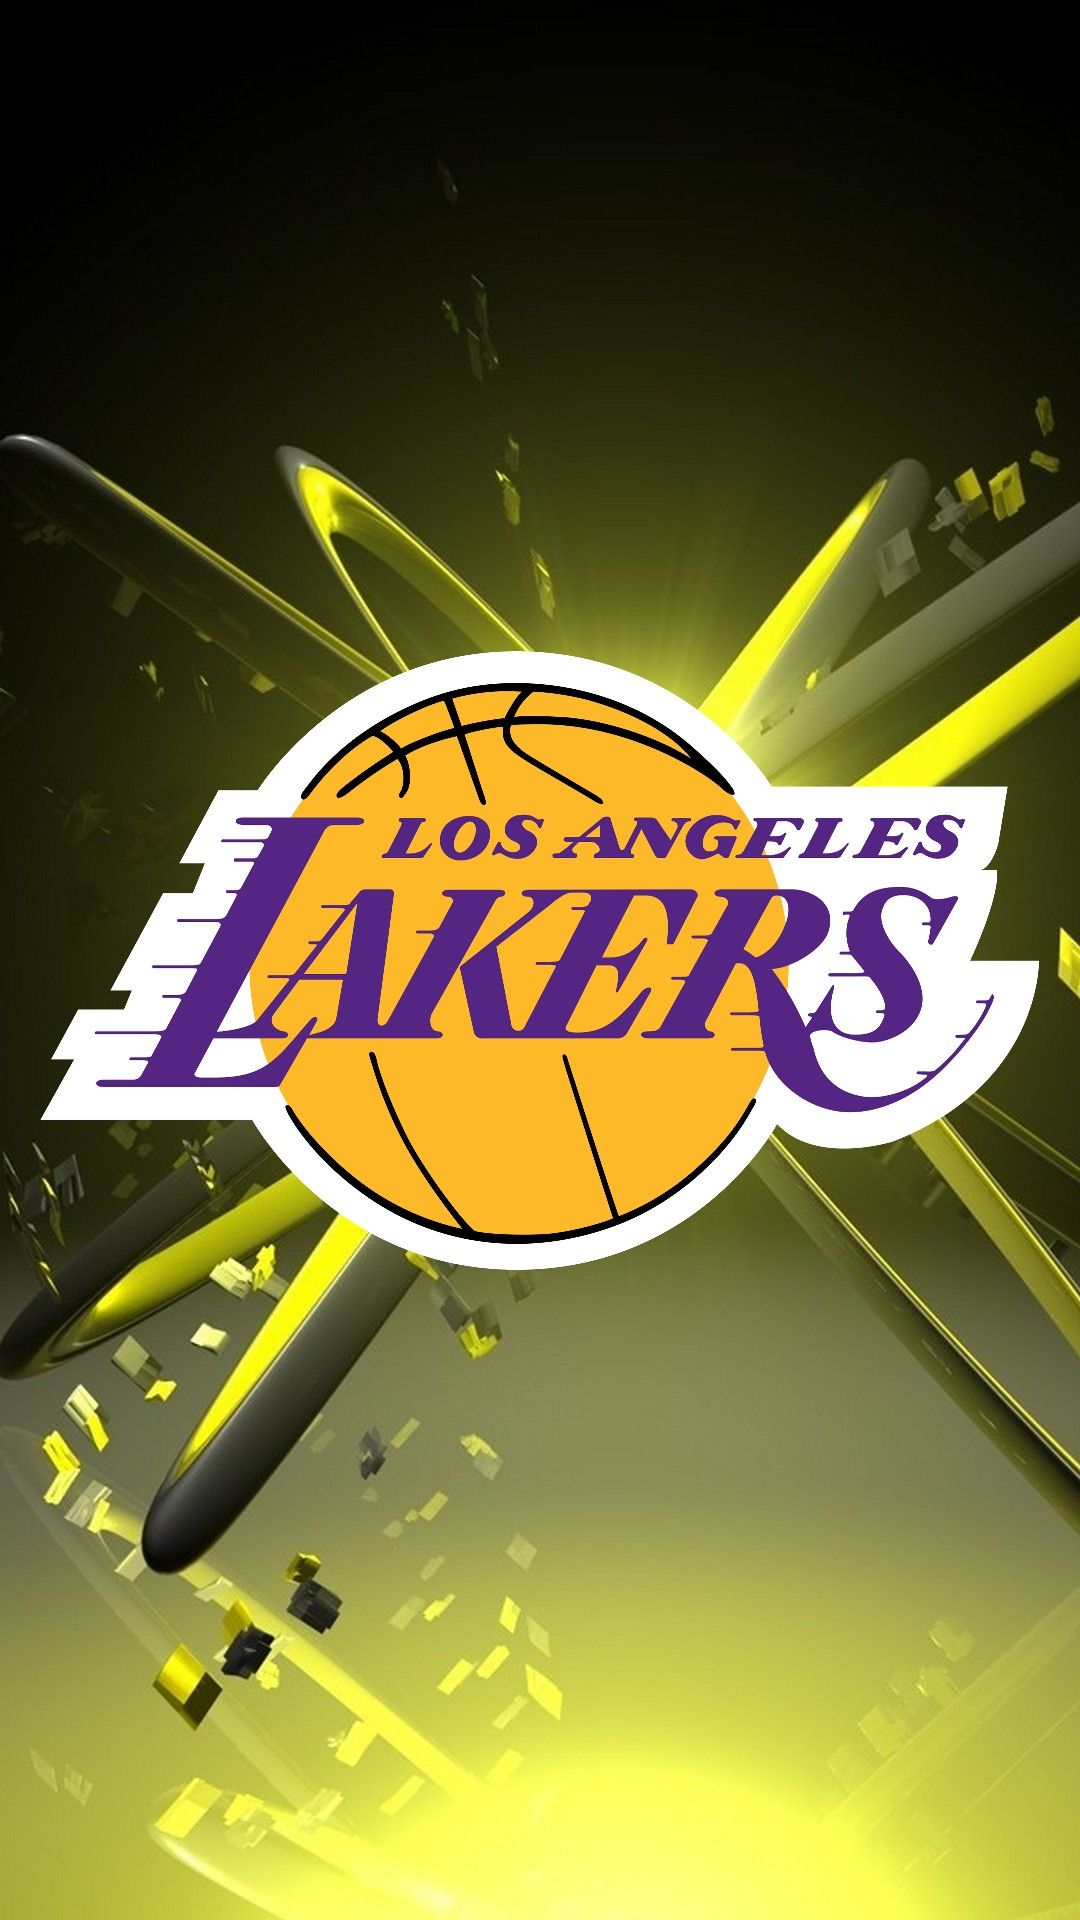 Los Angeles Lakers Wallpaper NBA by ToffuPL on DeviantArt